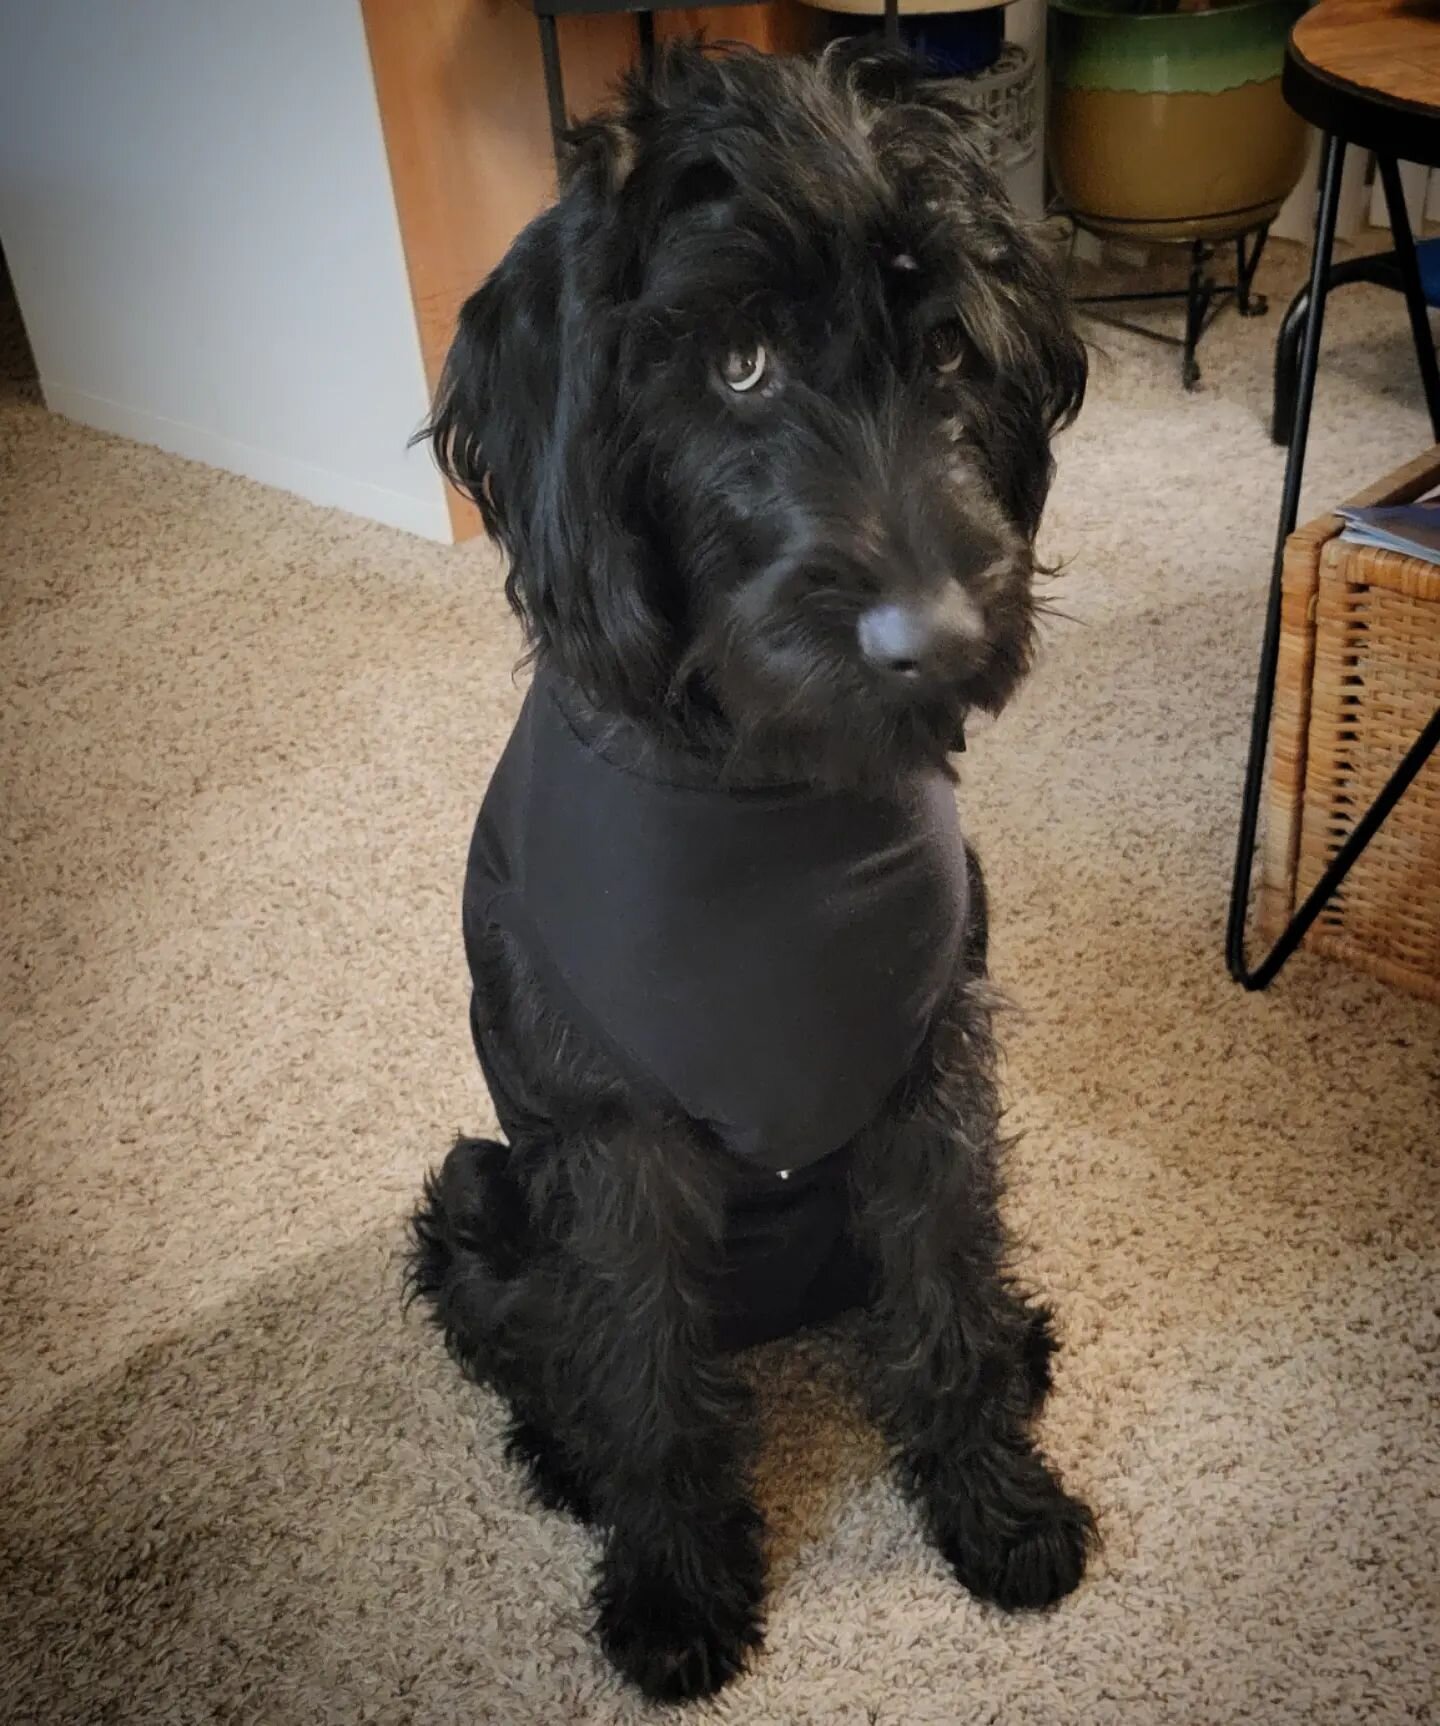 Maggie's not a fan of her post surgery onesie 😂

#dogsofinstagram